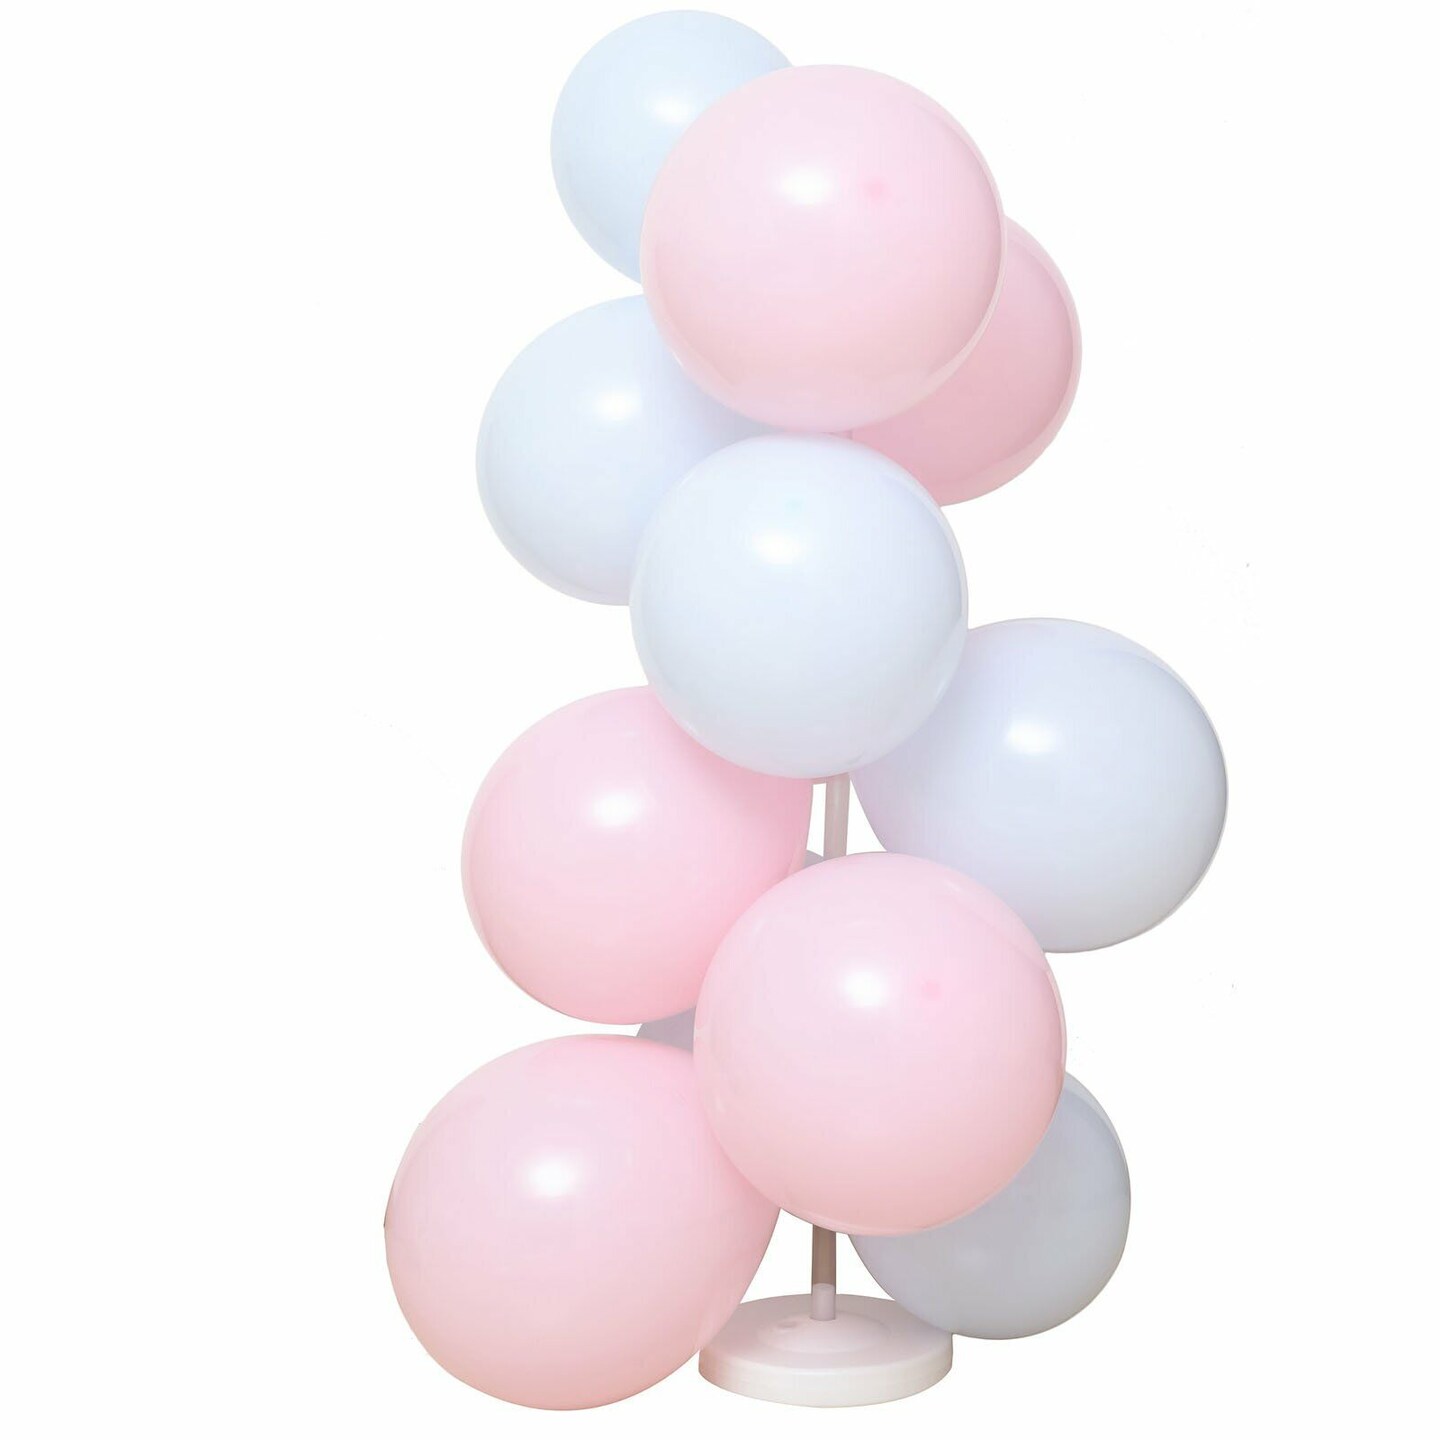 2 pcs 8 ft White Balloon Columns Stands Kit Set Wedding Party Decorations